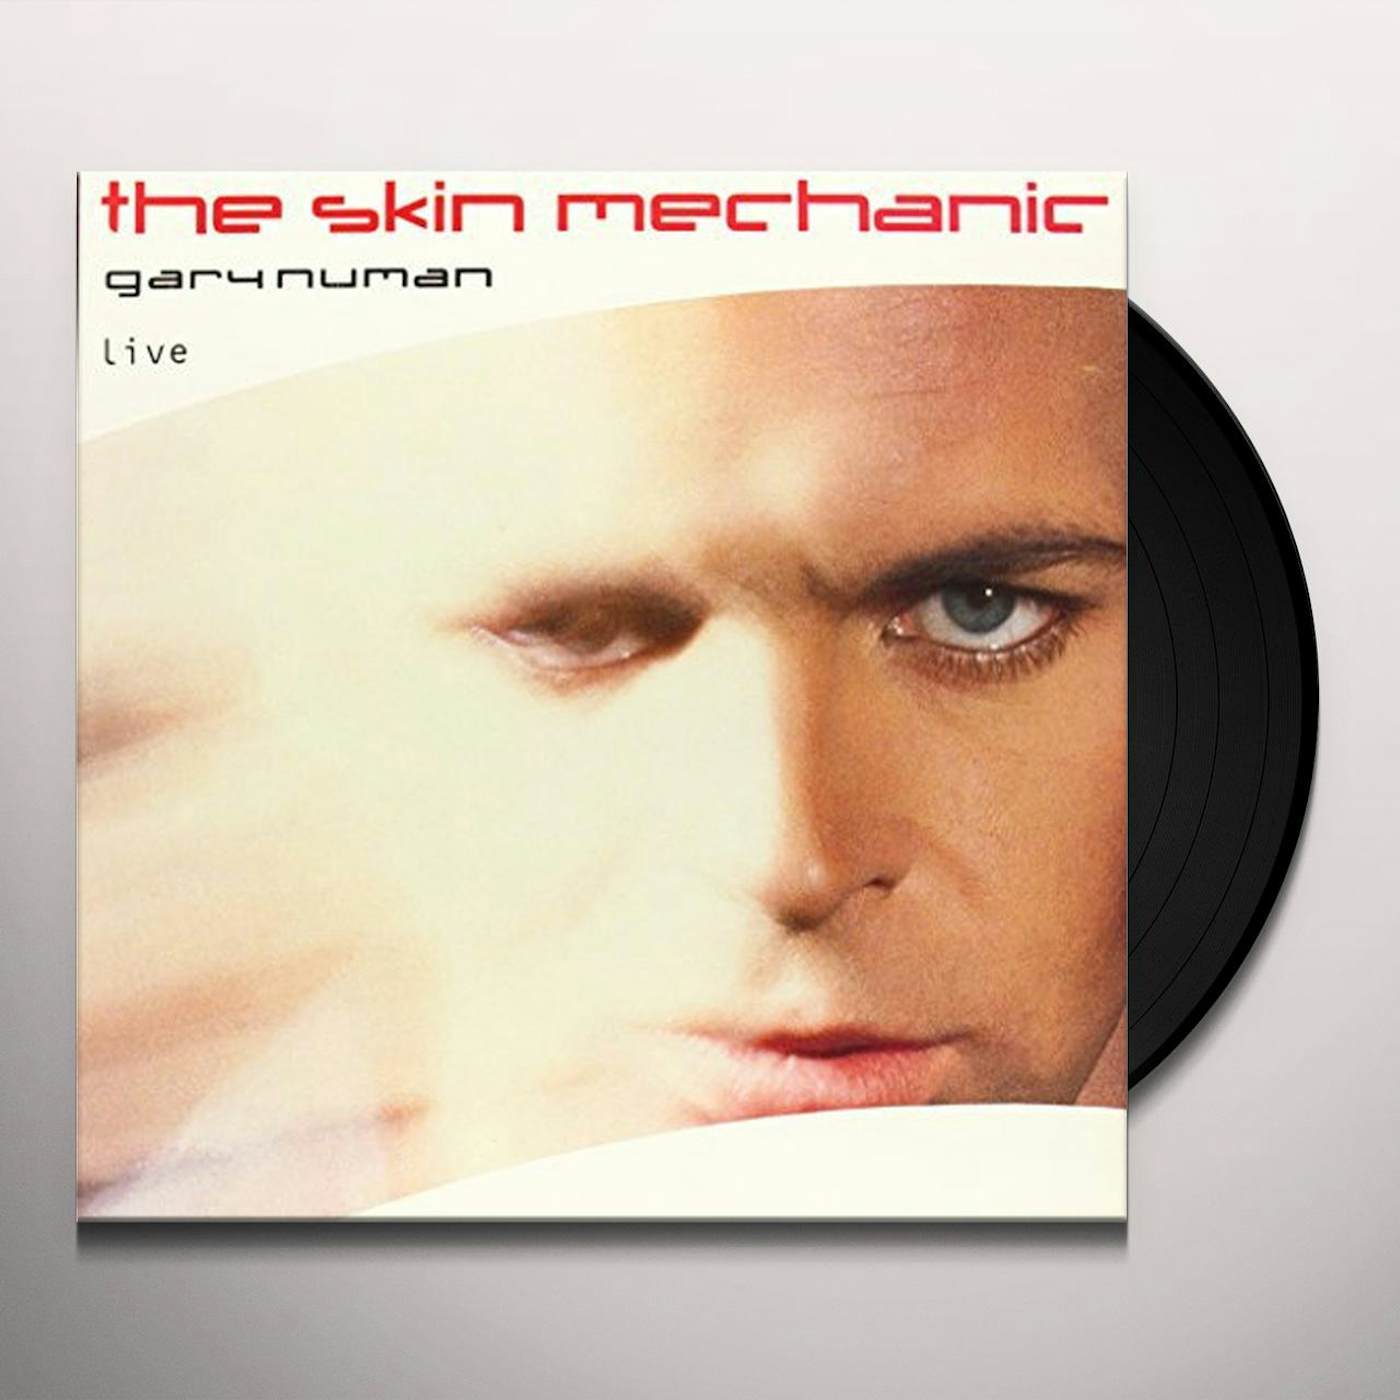 Gary Numan SKIN MECHANIC LIVE GATEFOLD Vinyl Record